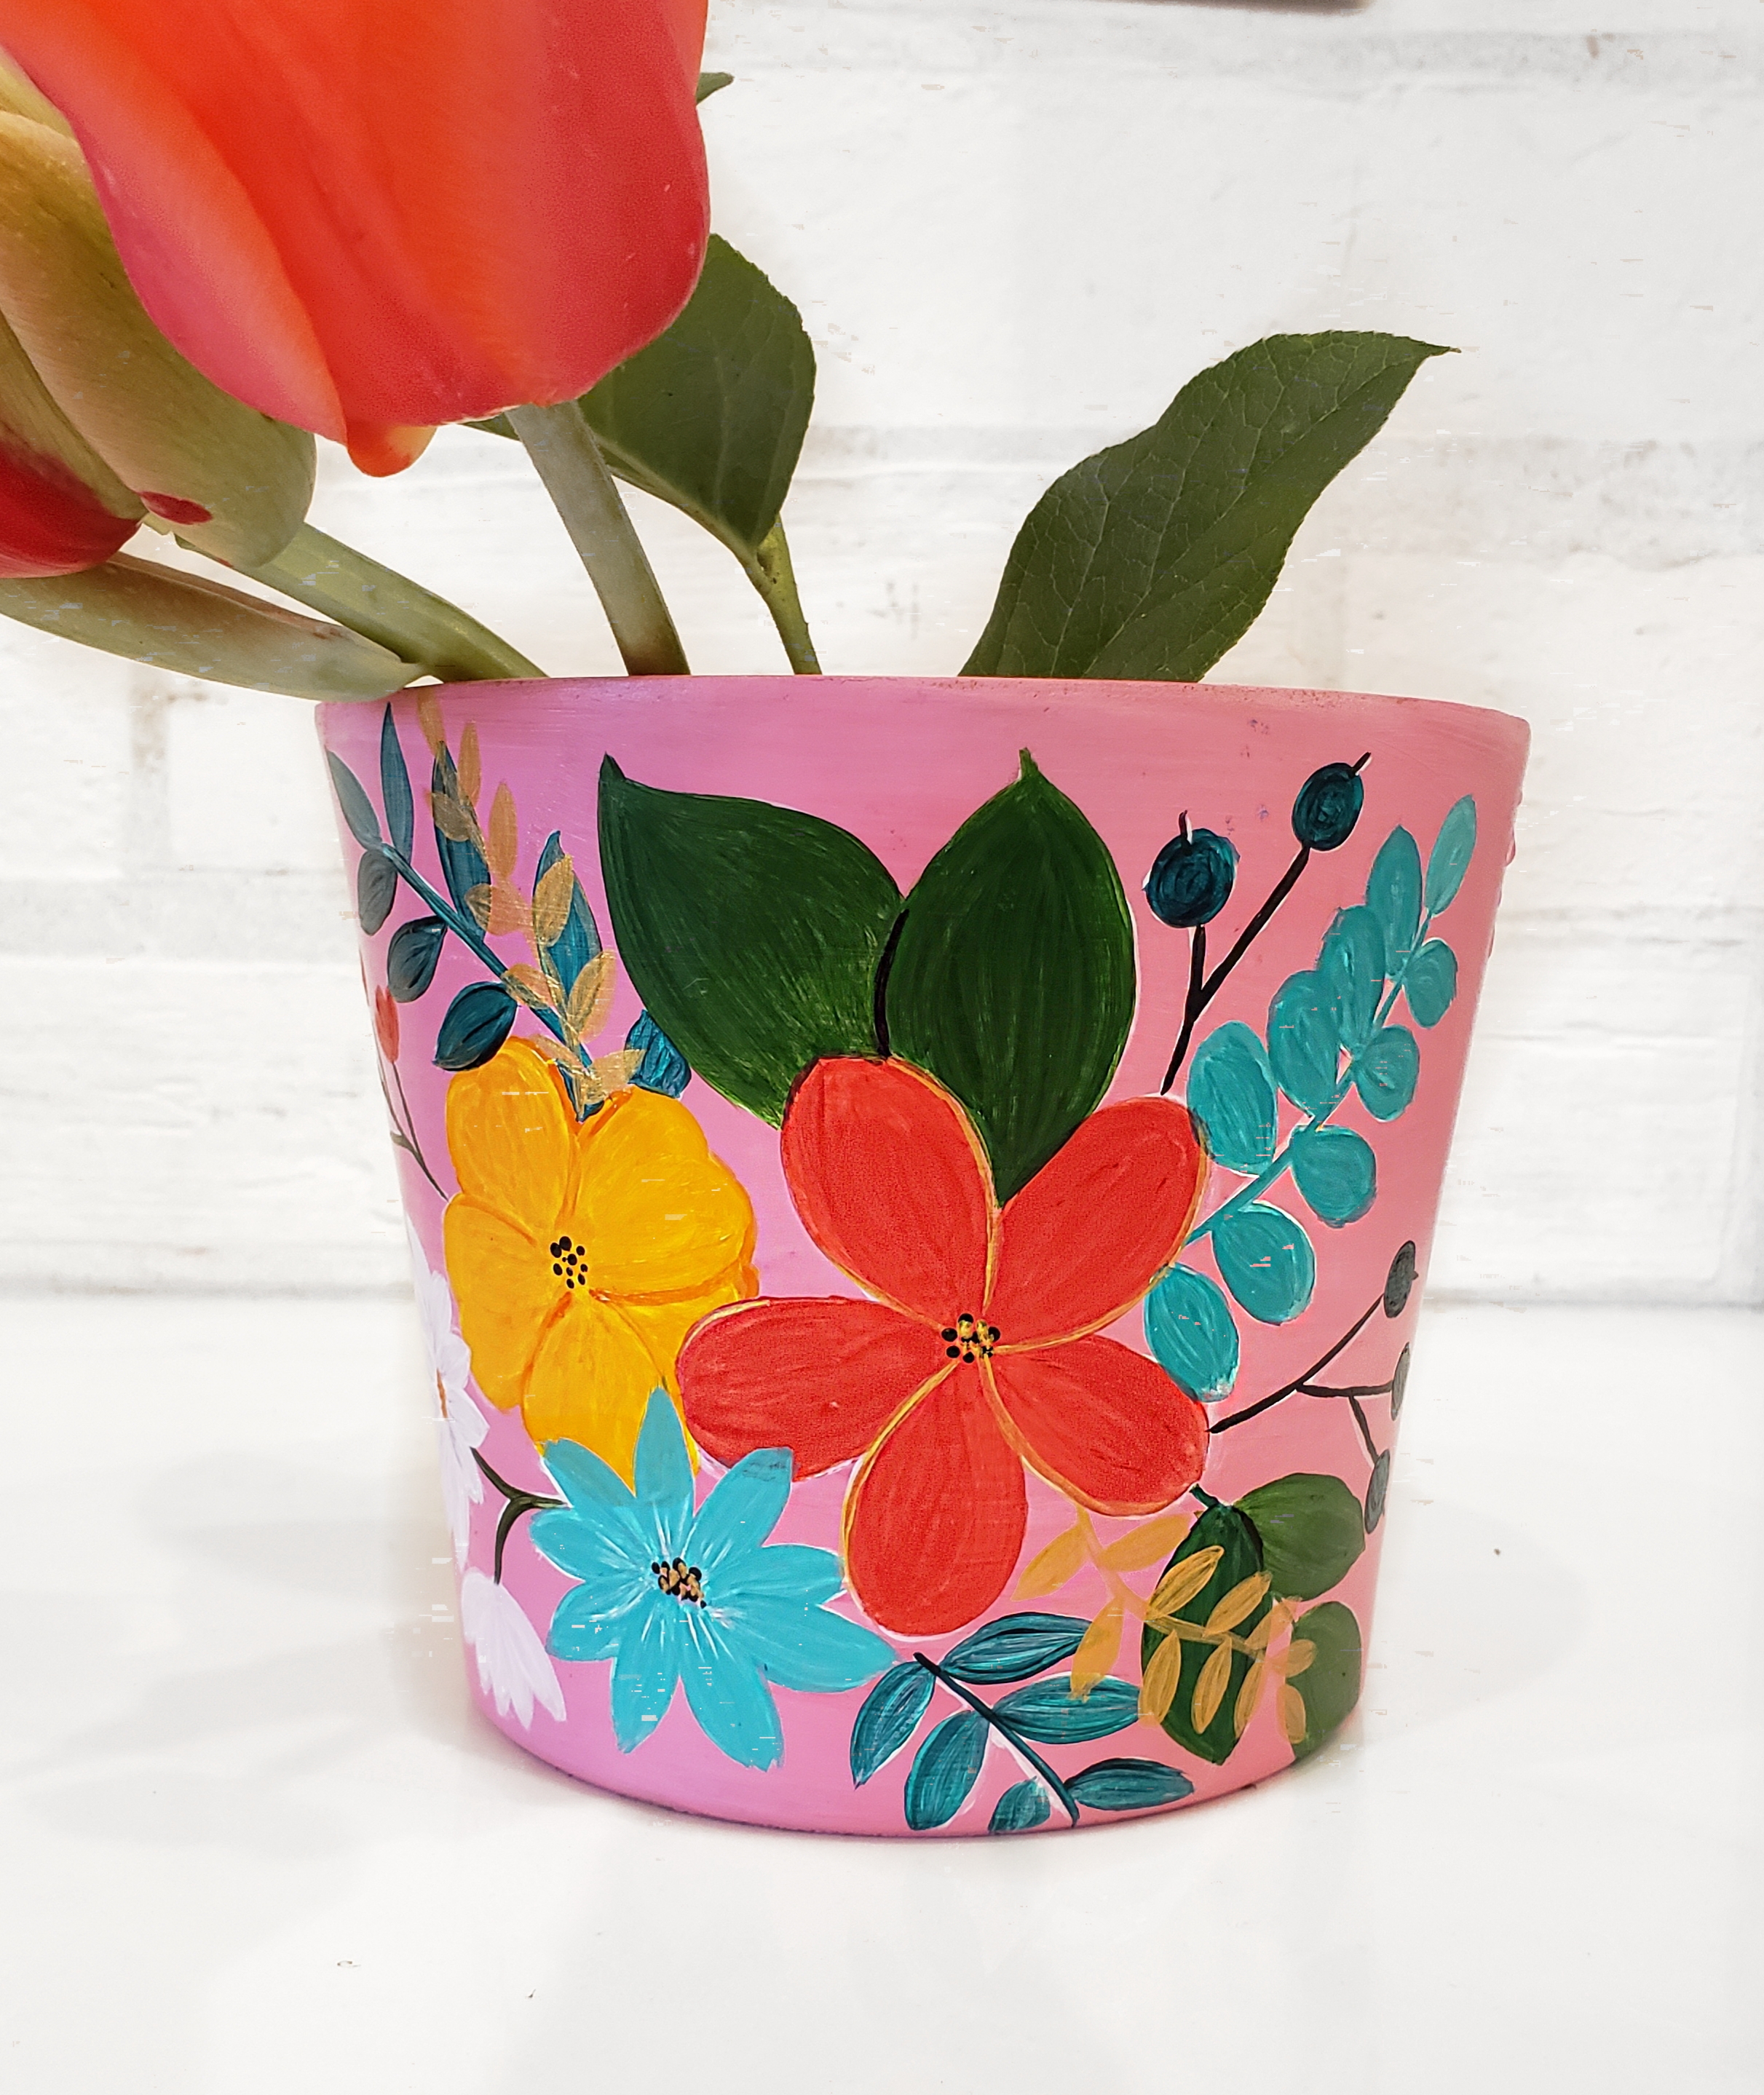 Mother's Day Celebration - Paint a pot!